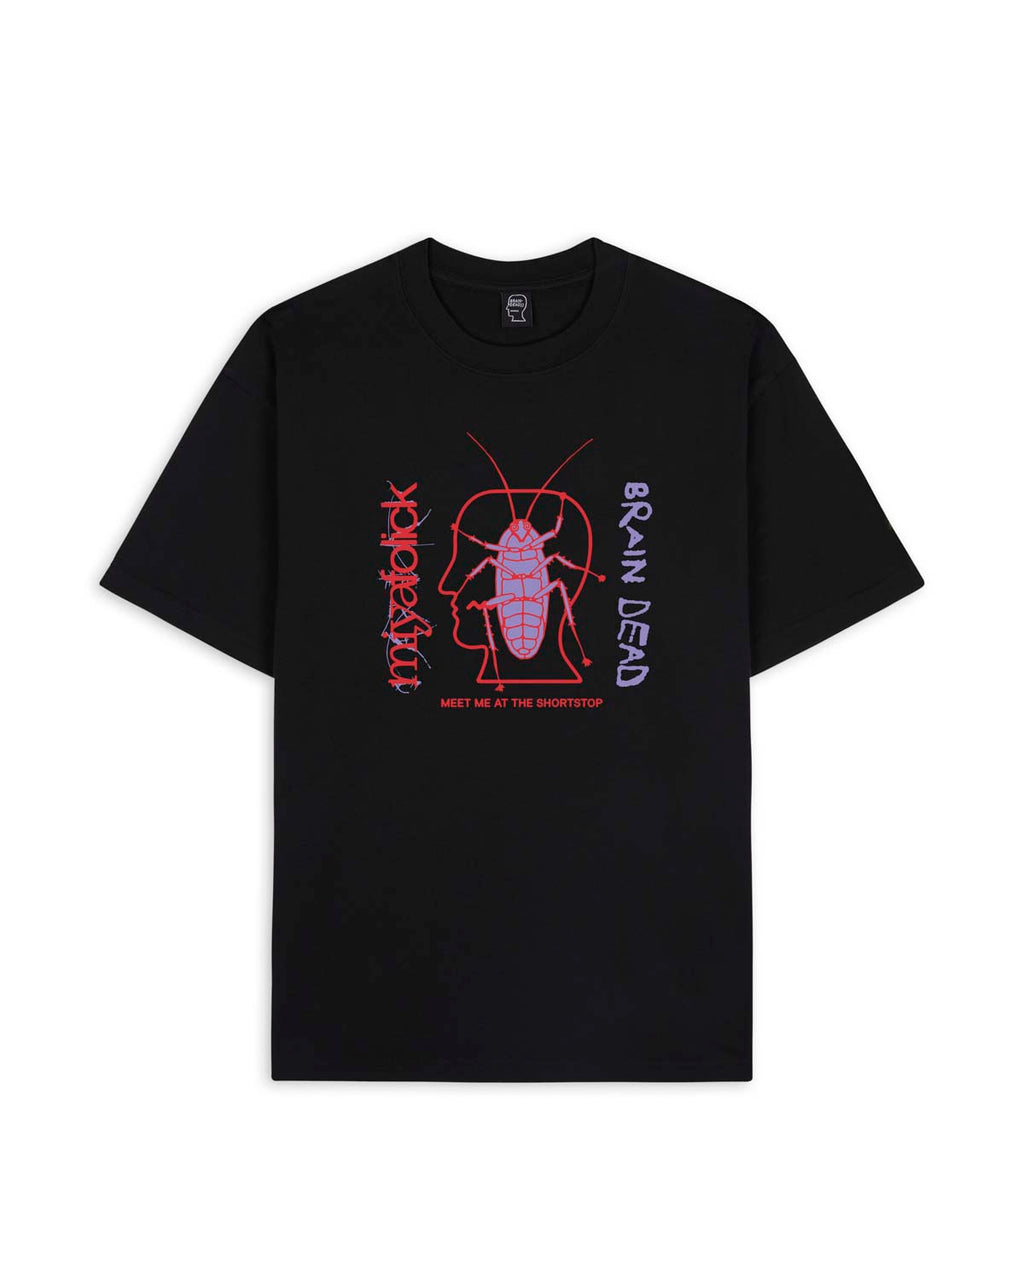 Brain Dead x Miya Folick Roach T-shirt - Black